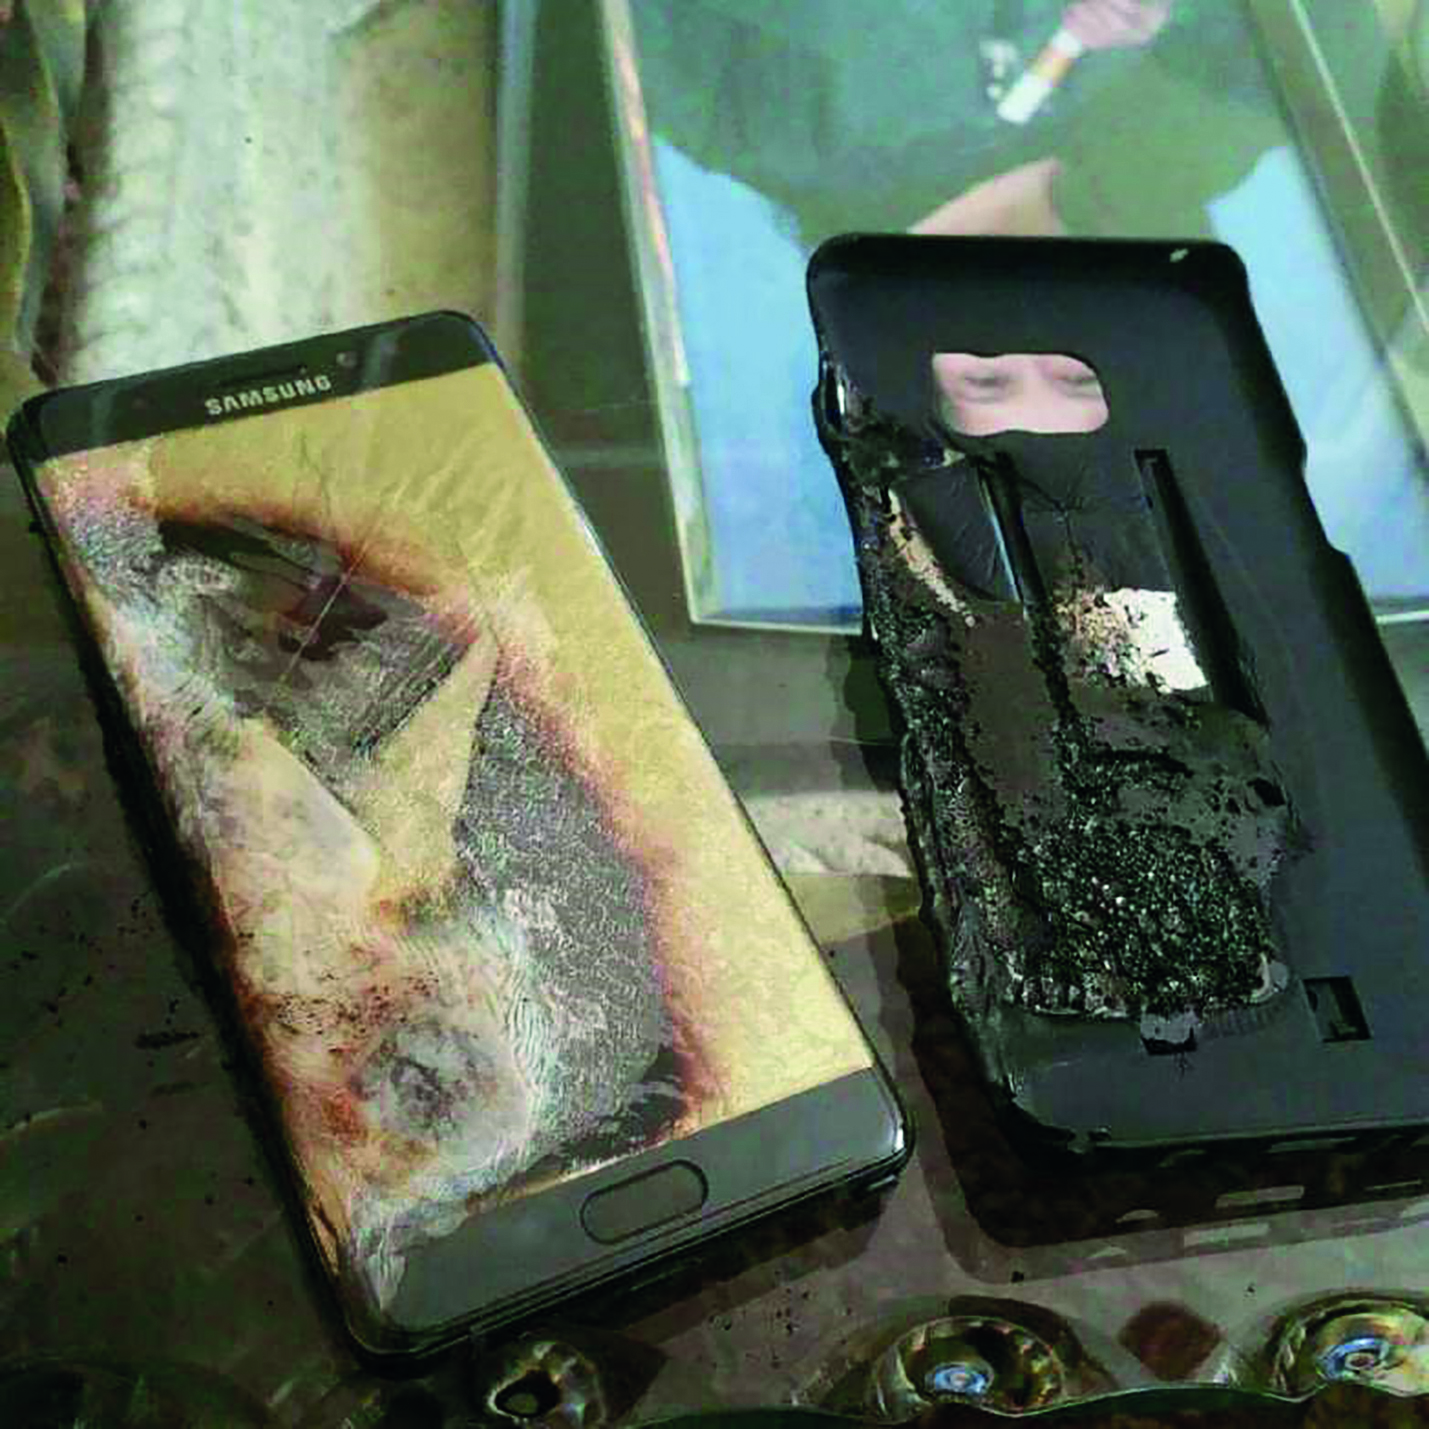 Obr. 10 Samsung Galaxy Note 7 a ochranný plastový kryt po požáru [ilustrační fotografie]